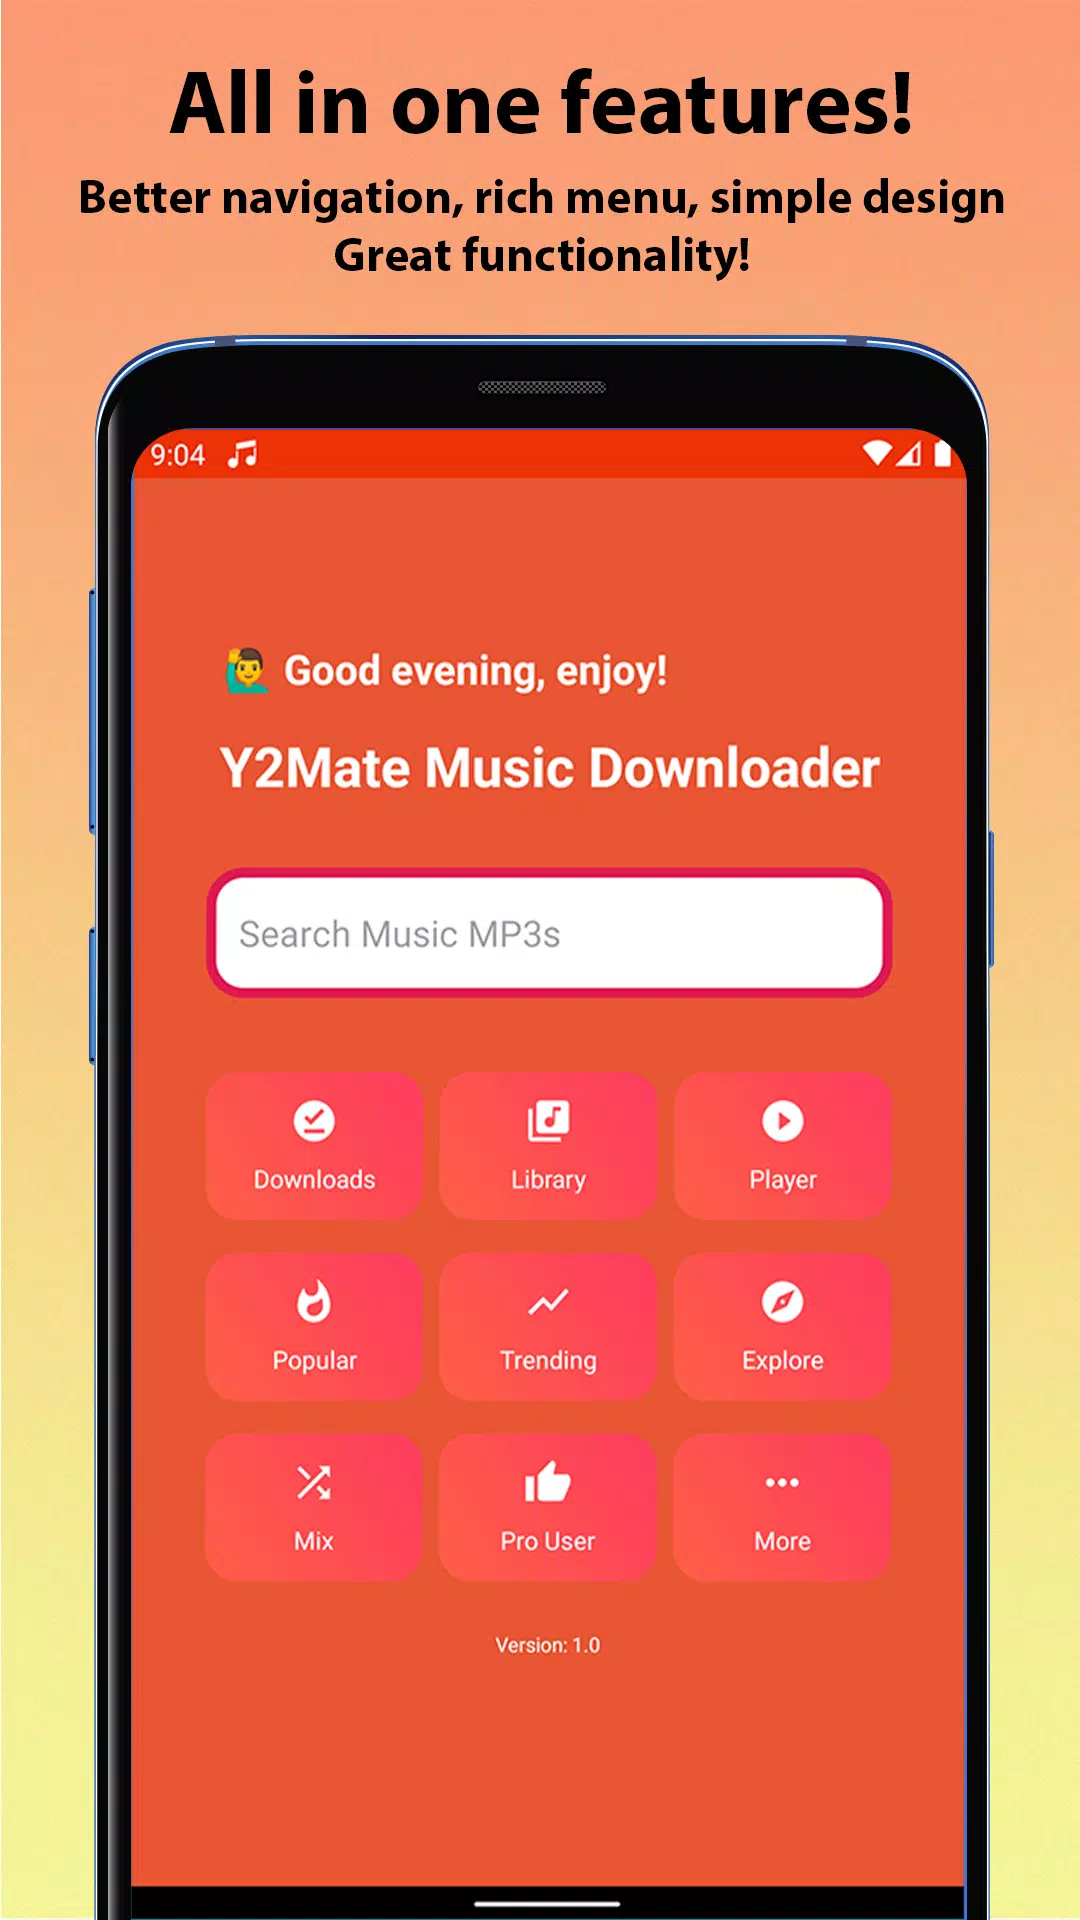 Download do APK de Y2Mate - MP3 Music Downloader para Android